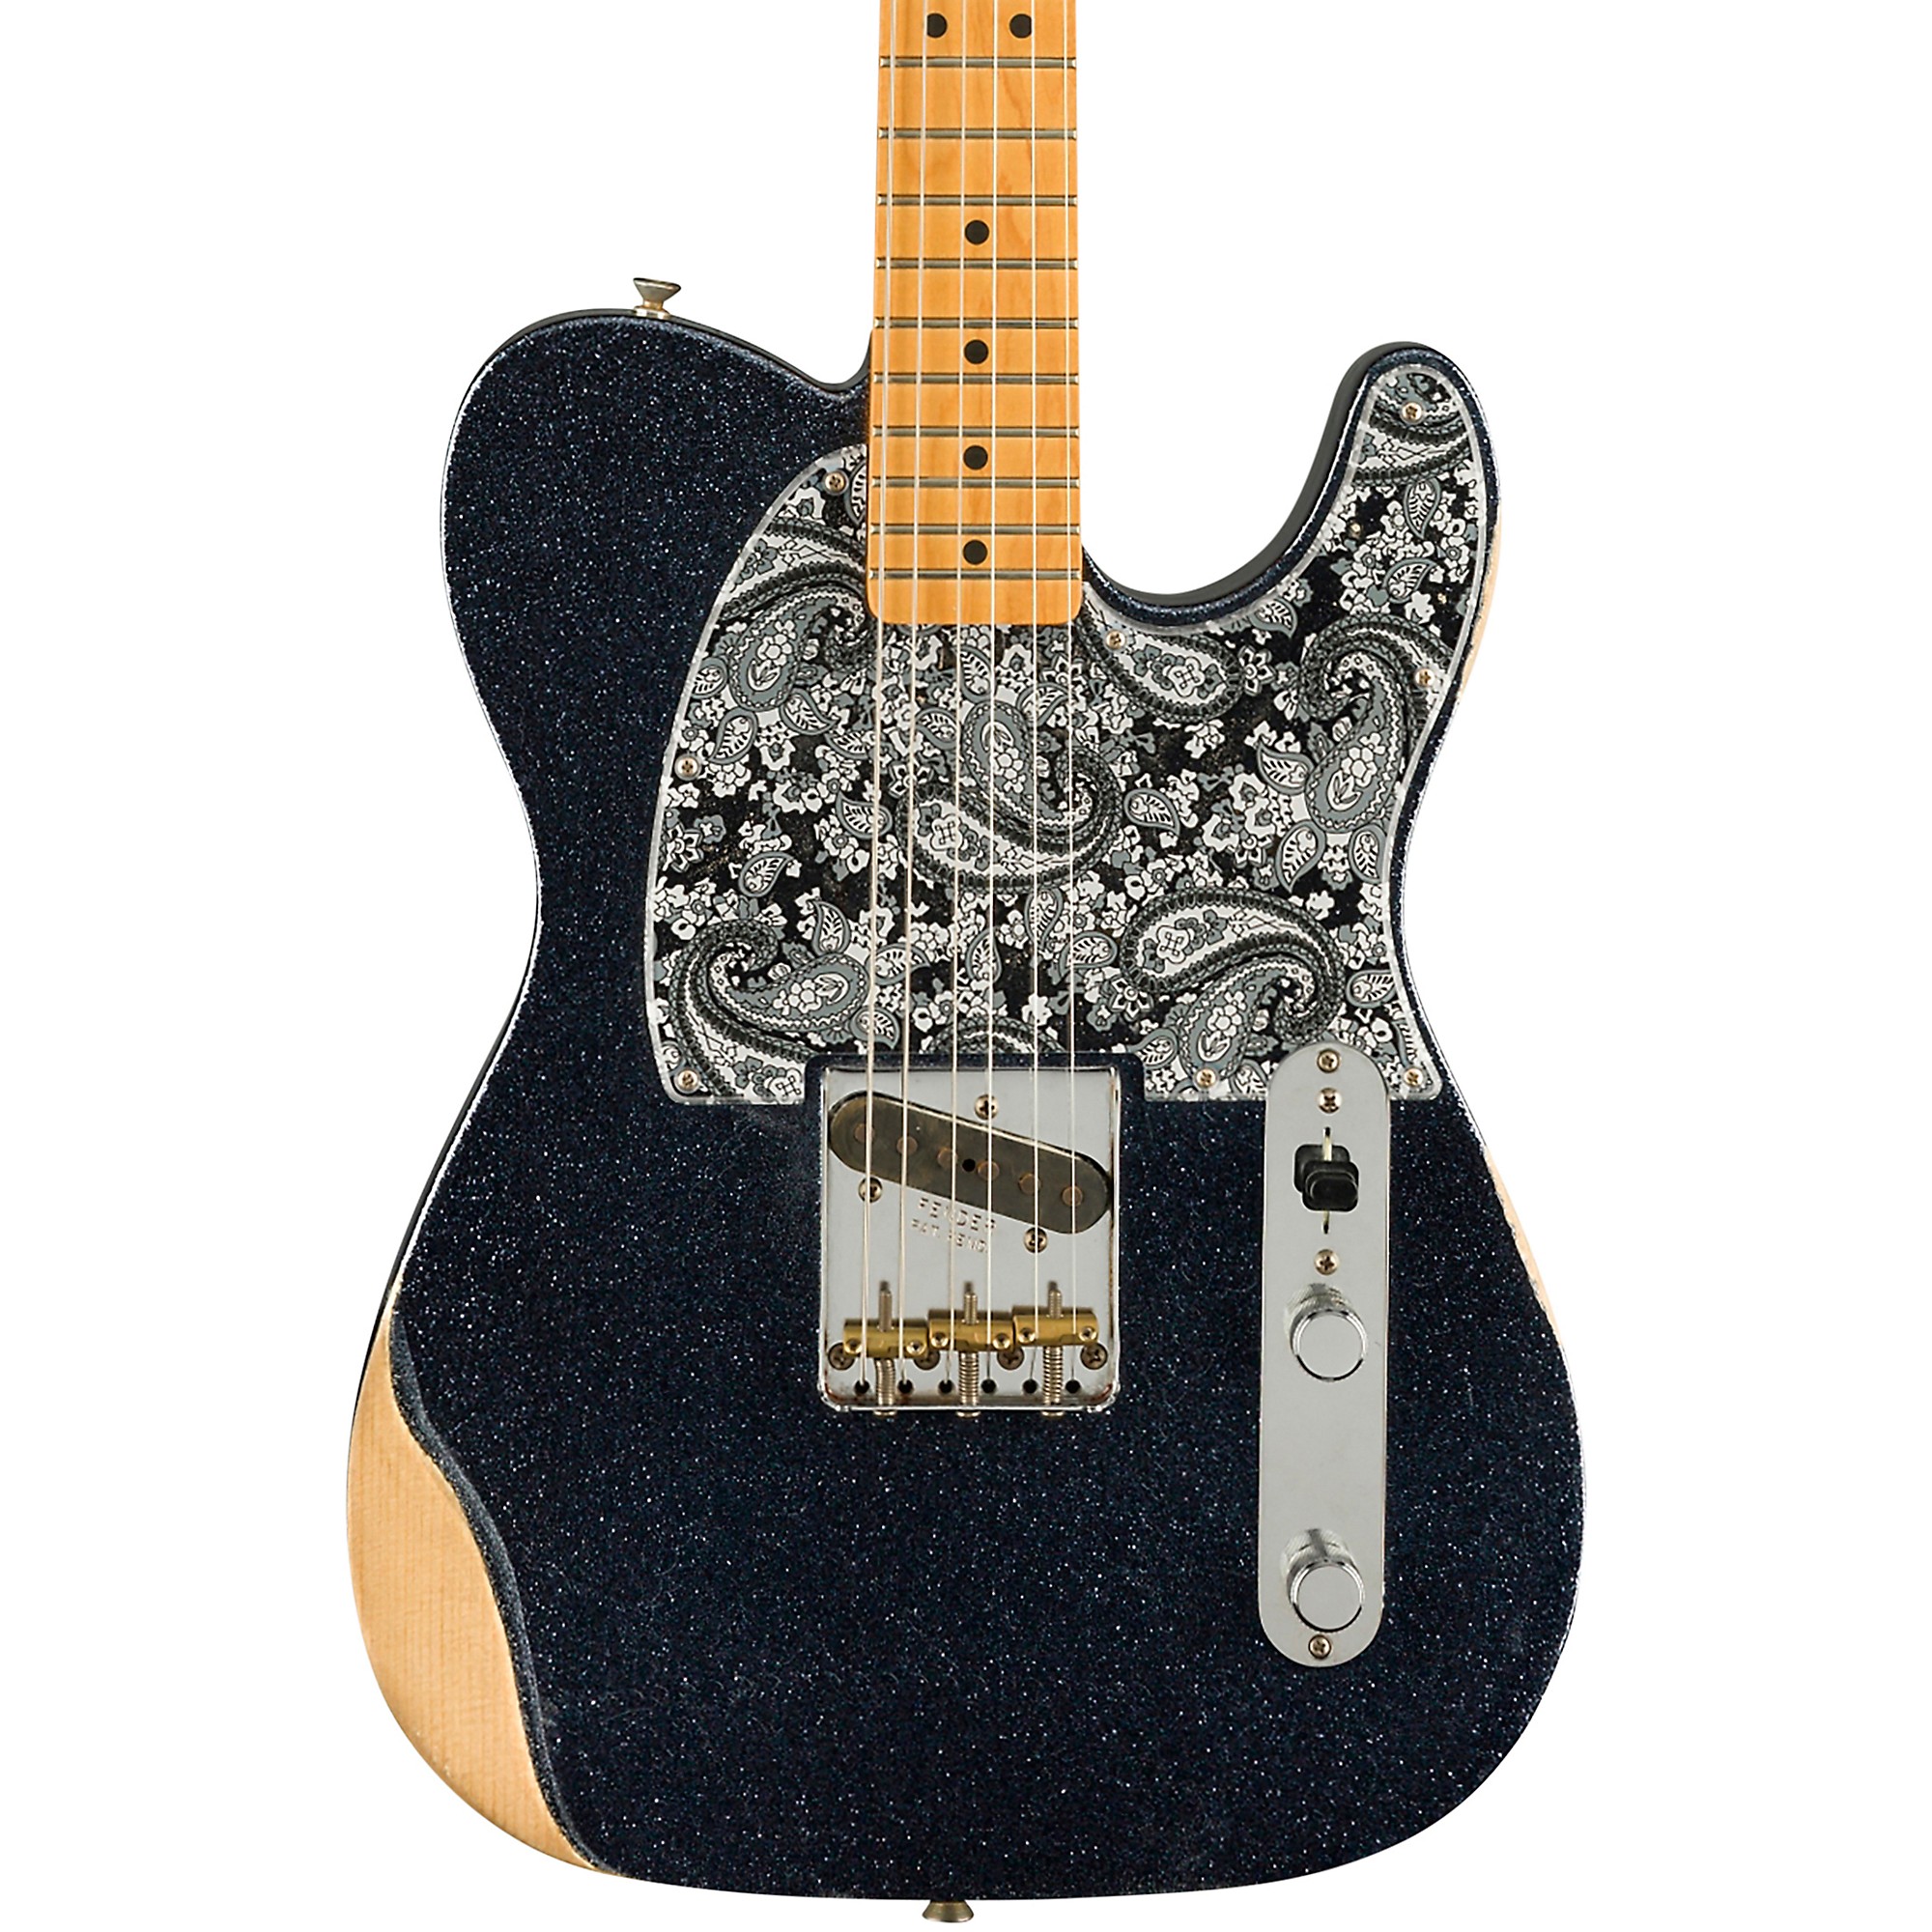 Электрогитара Fender Brad Paisley Esquire Black Sparkle электрогитара fender brad paisley esquire electric guitar black sparkle